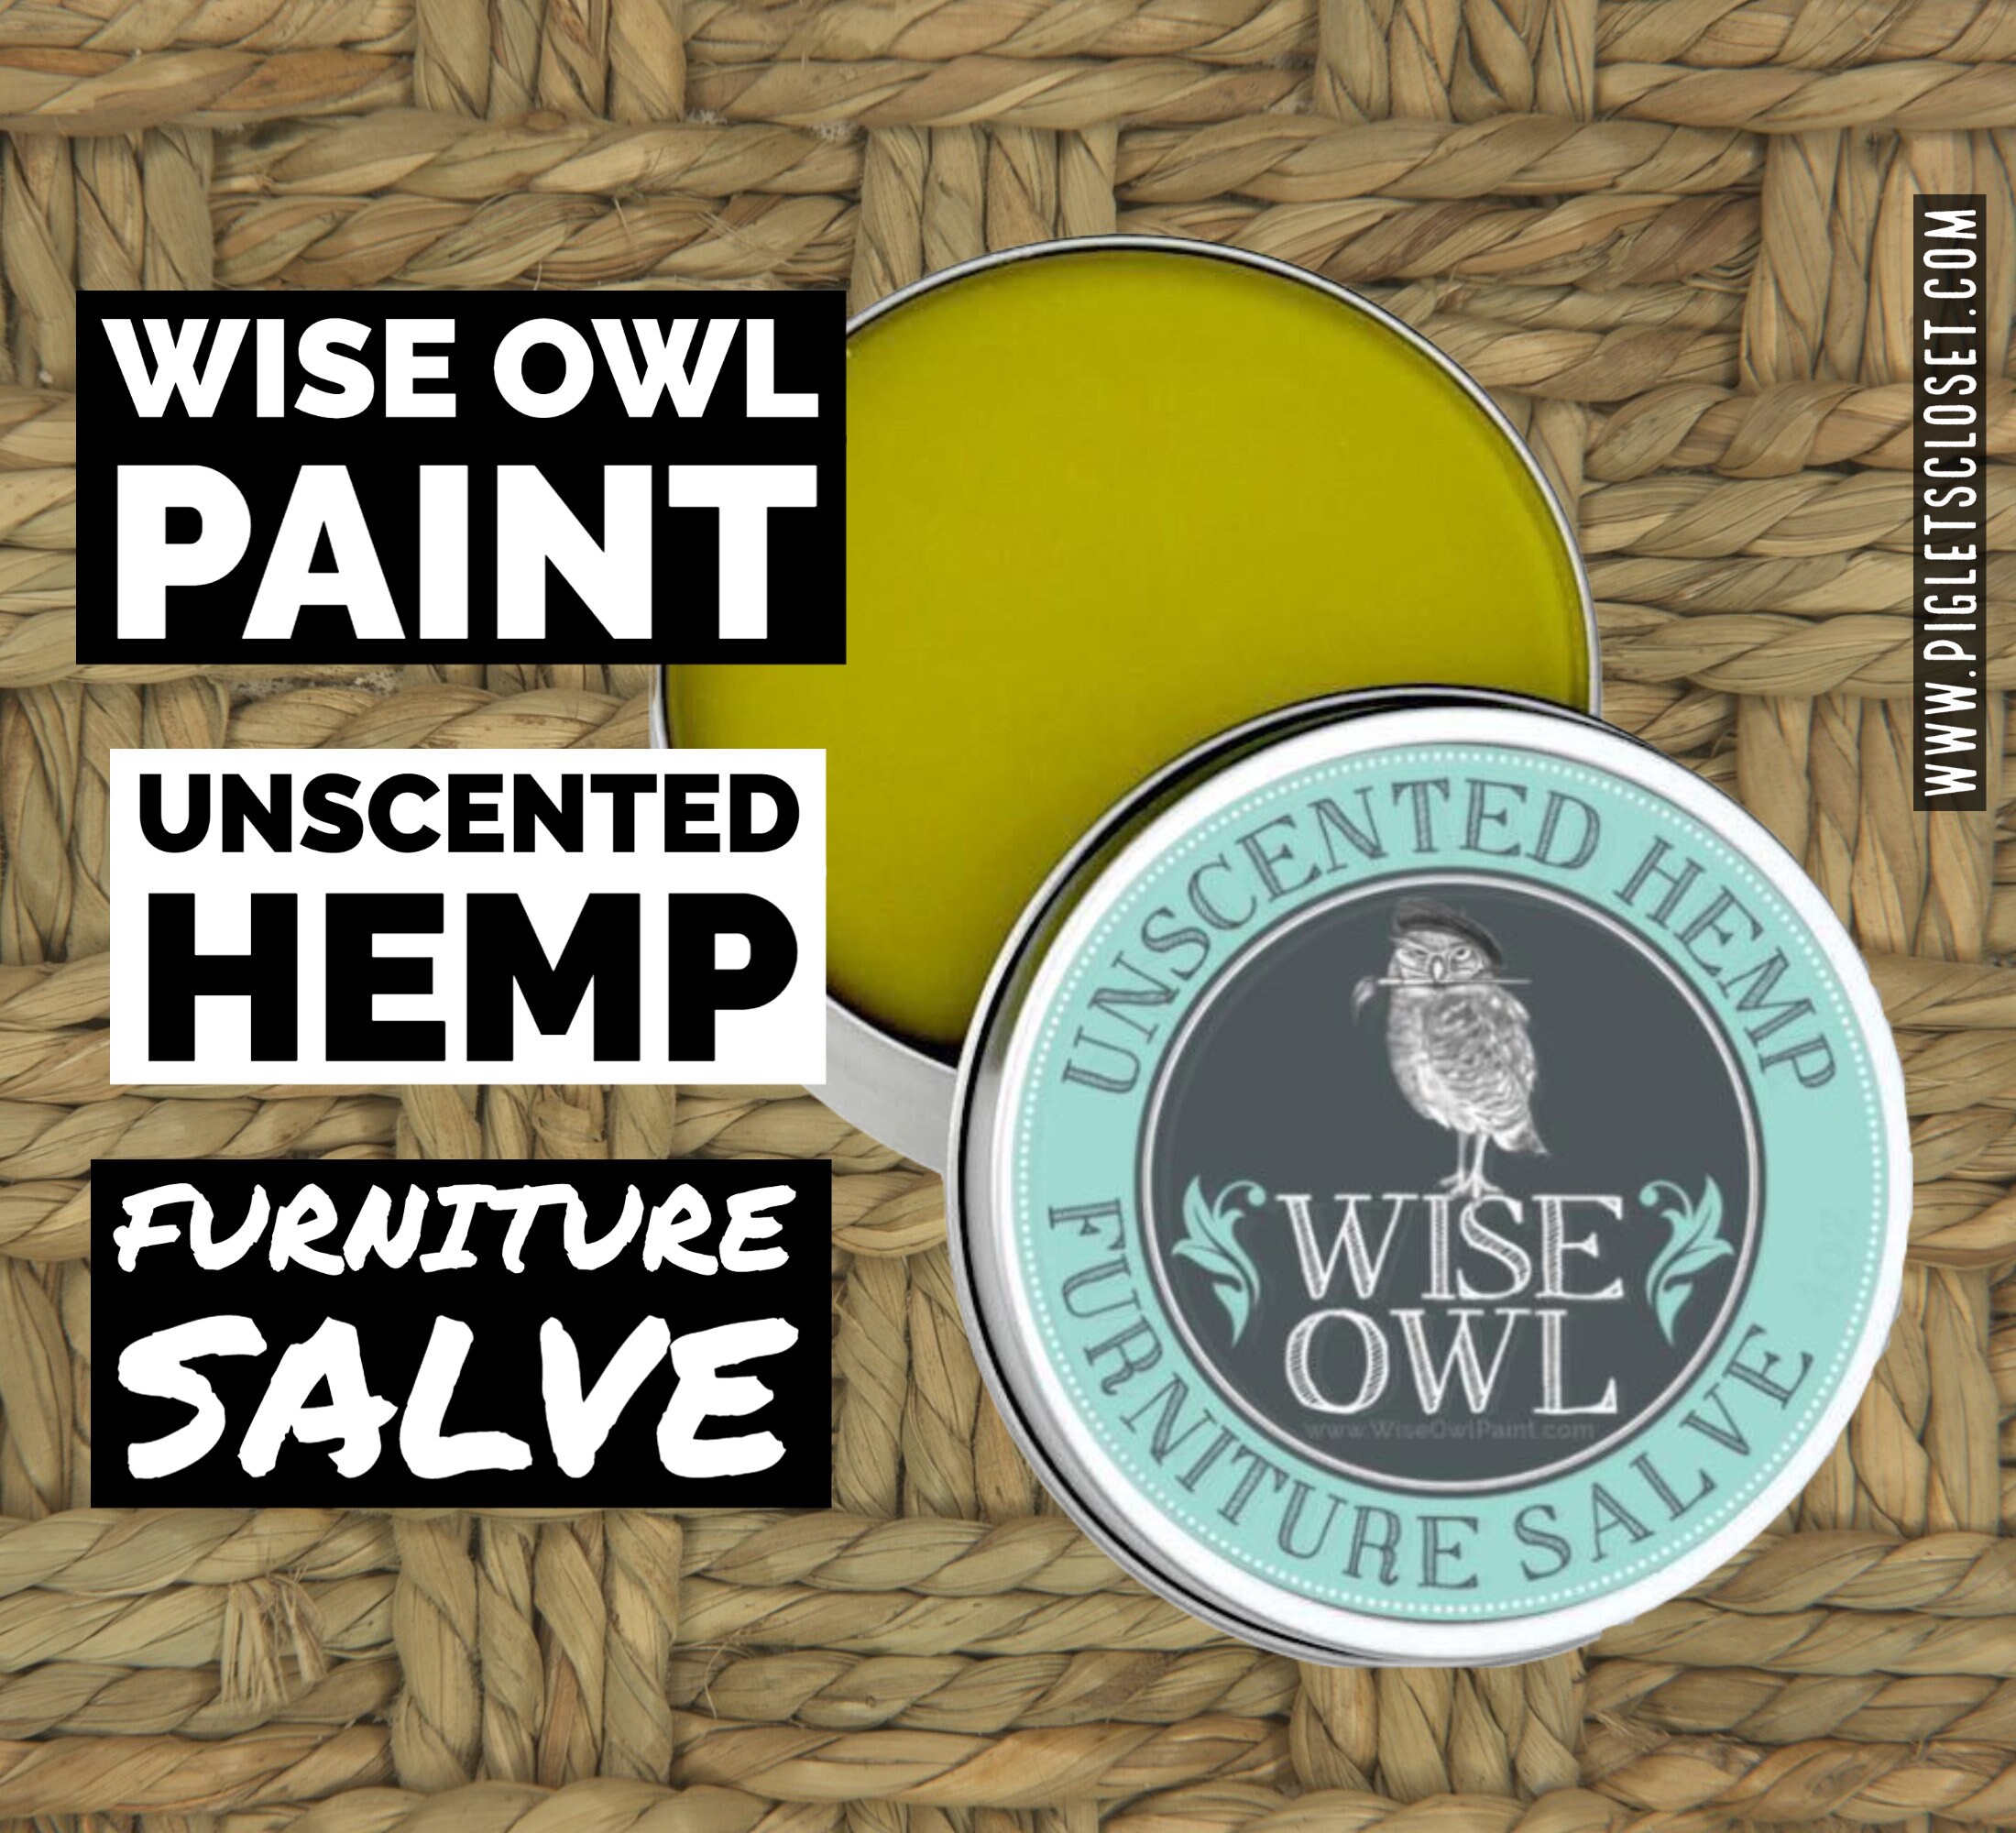 Wise Owl Furniture Salve - SAMPLE SET (16 Current Scents)